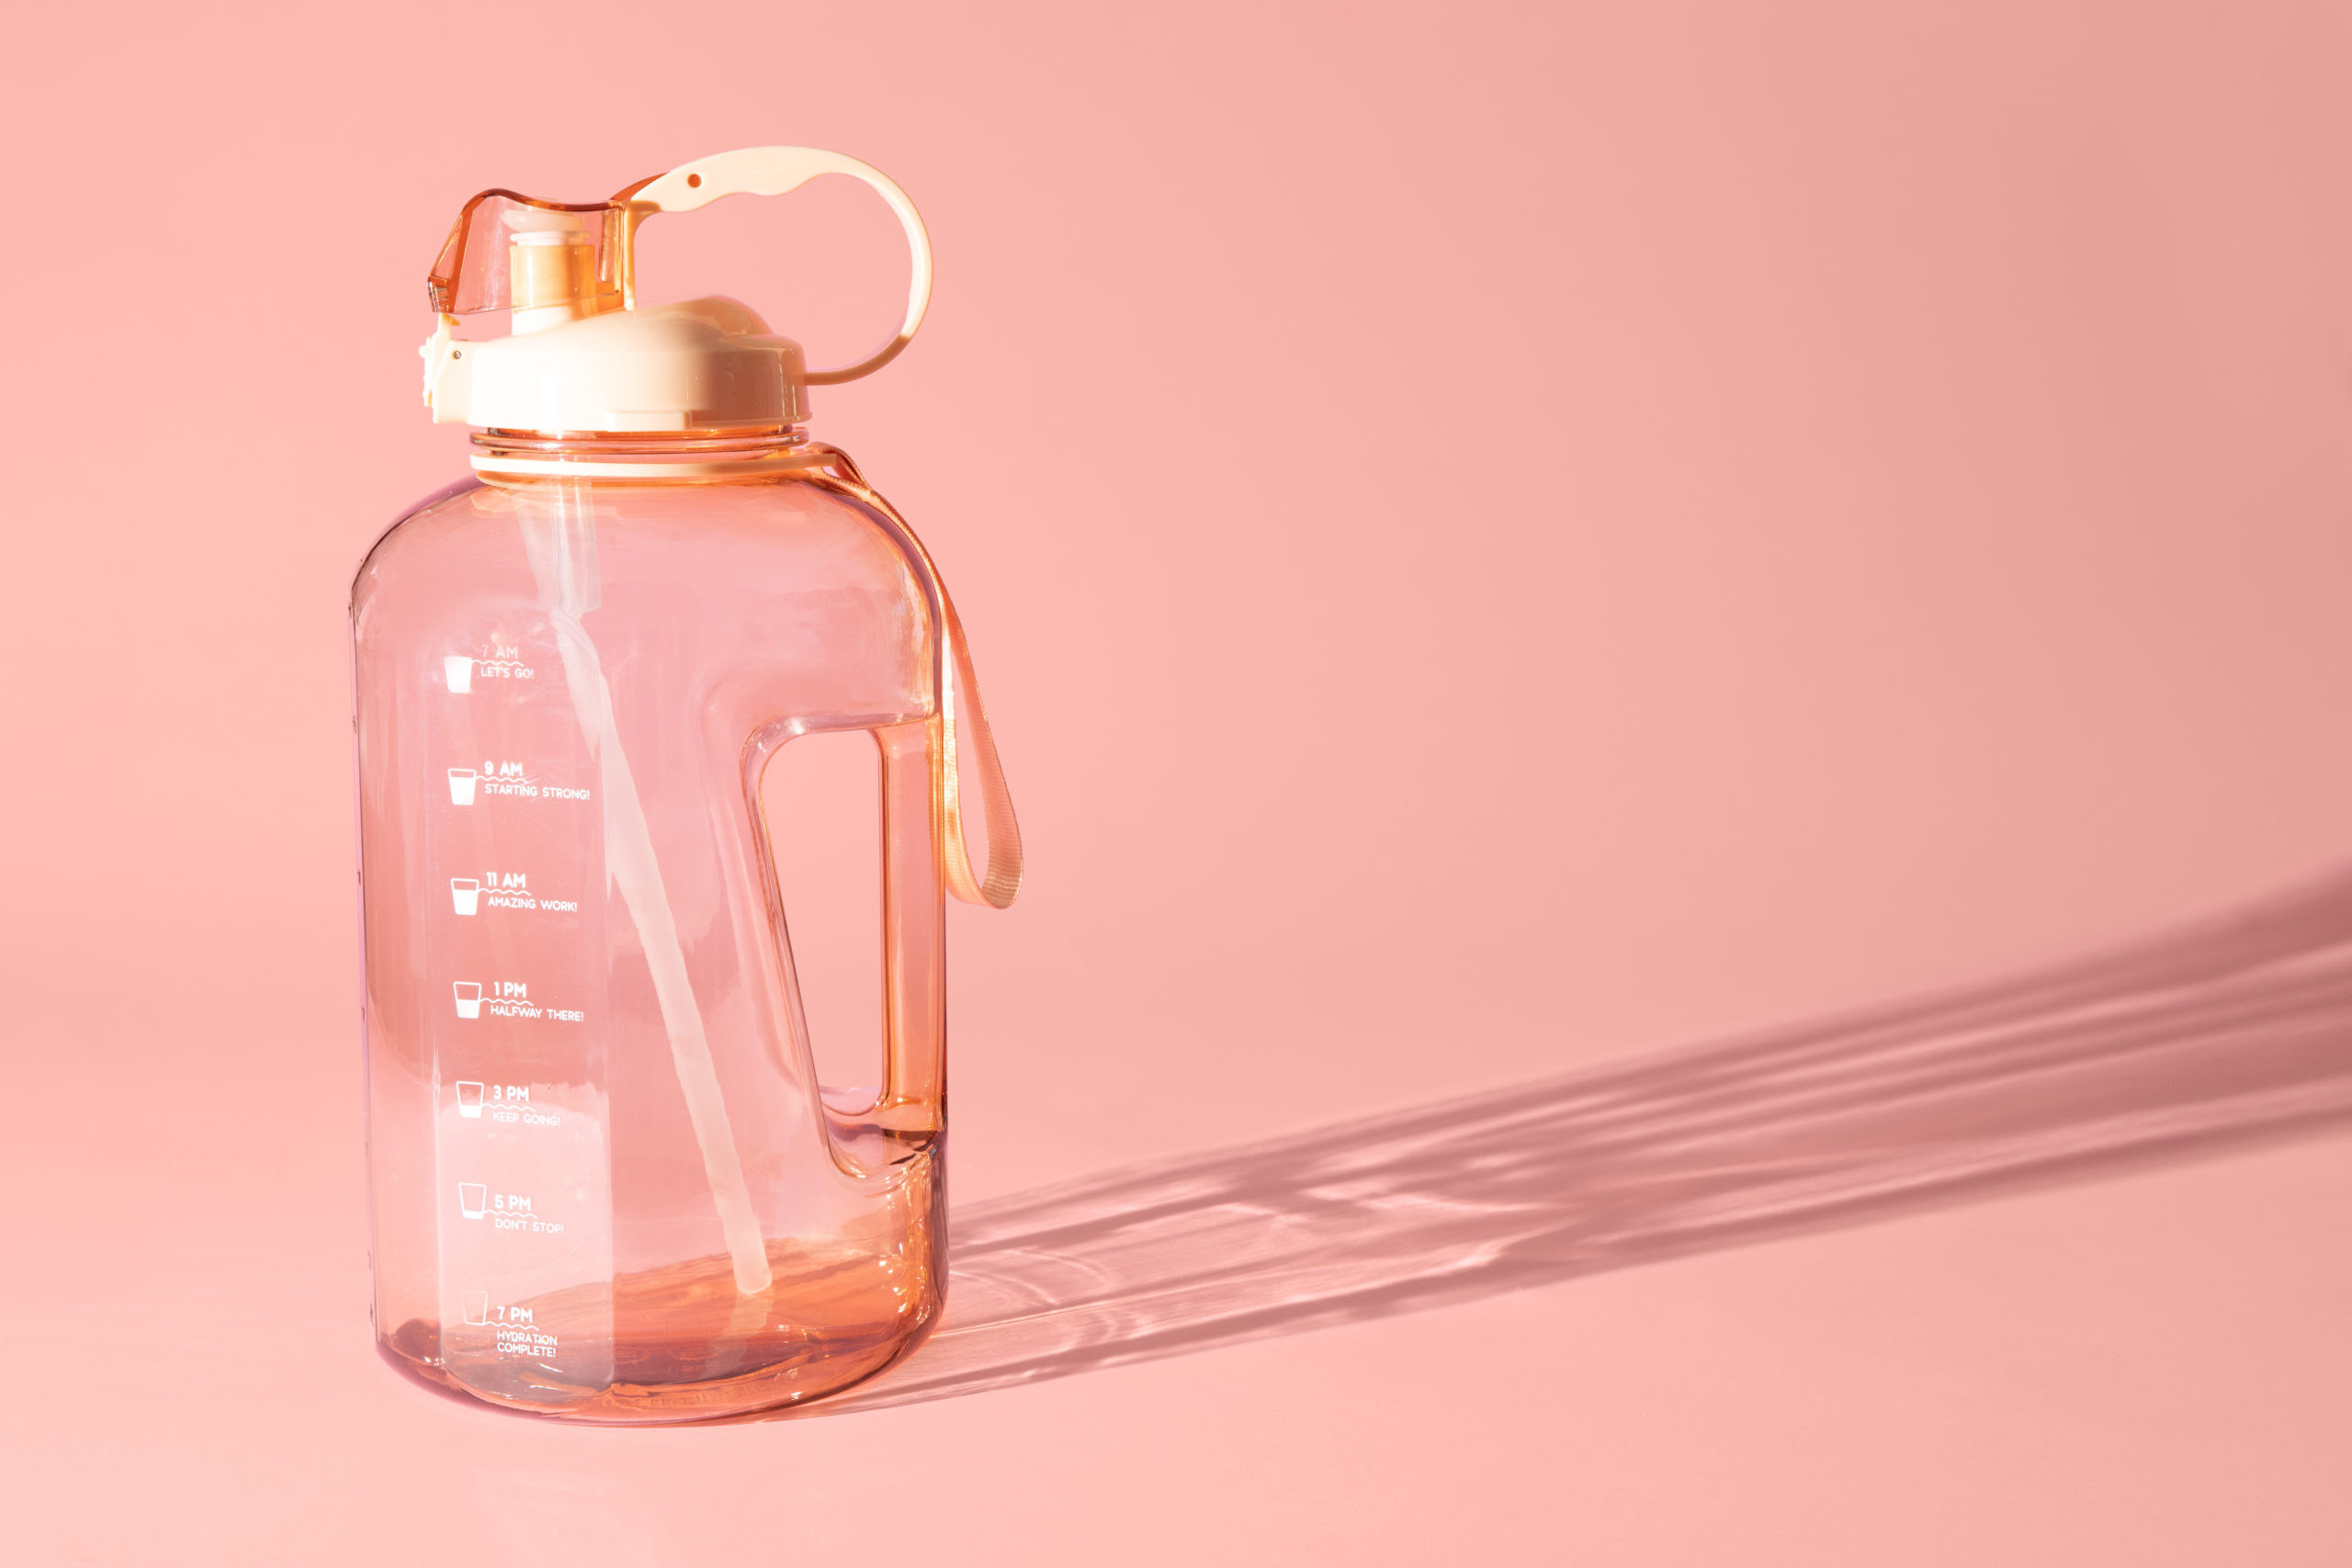 Blogilates Water Bottle Sling - Peach